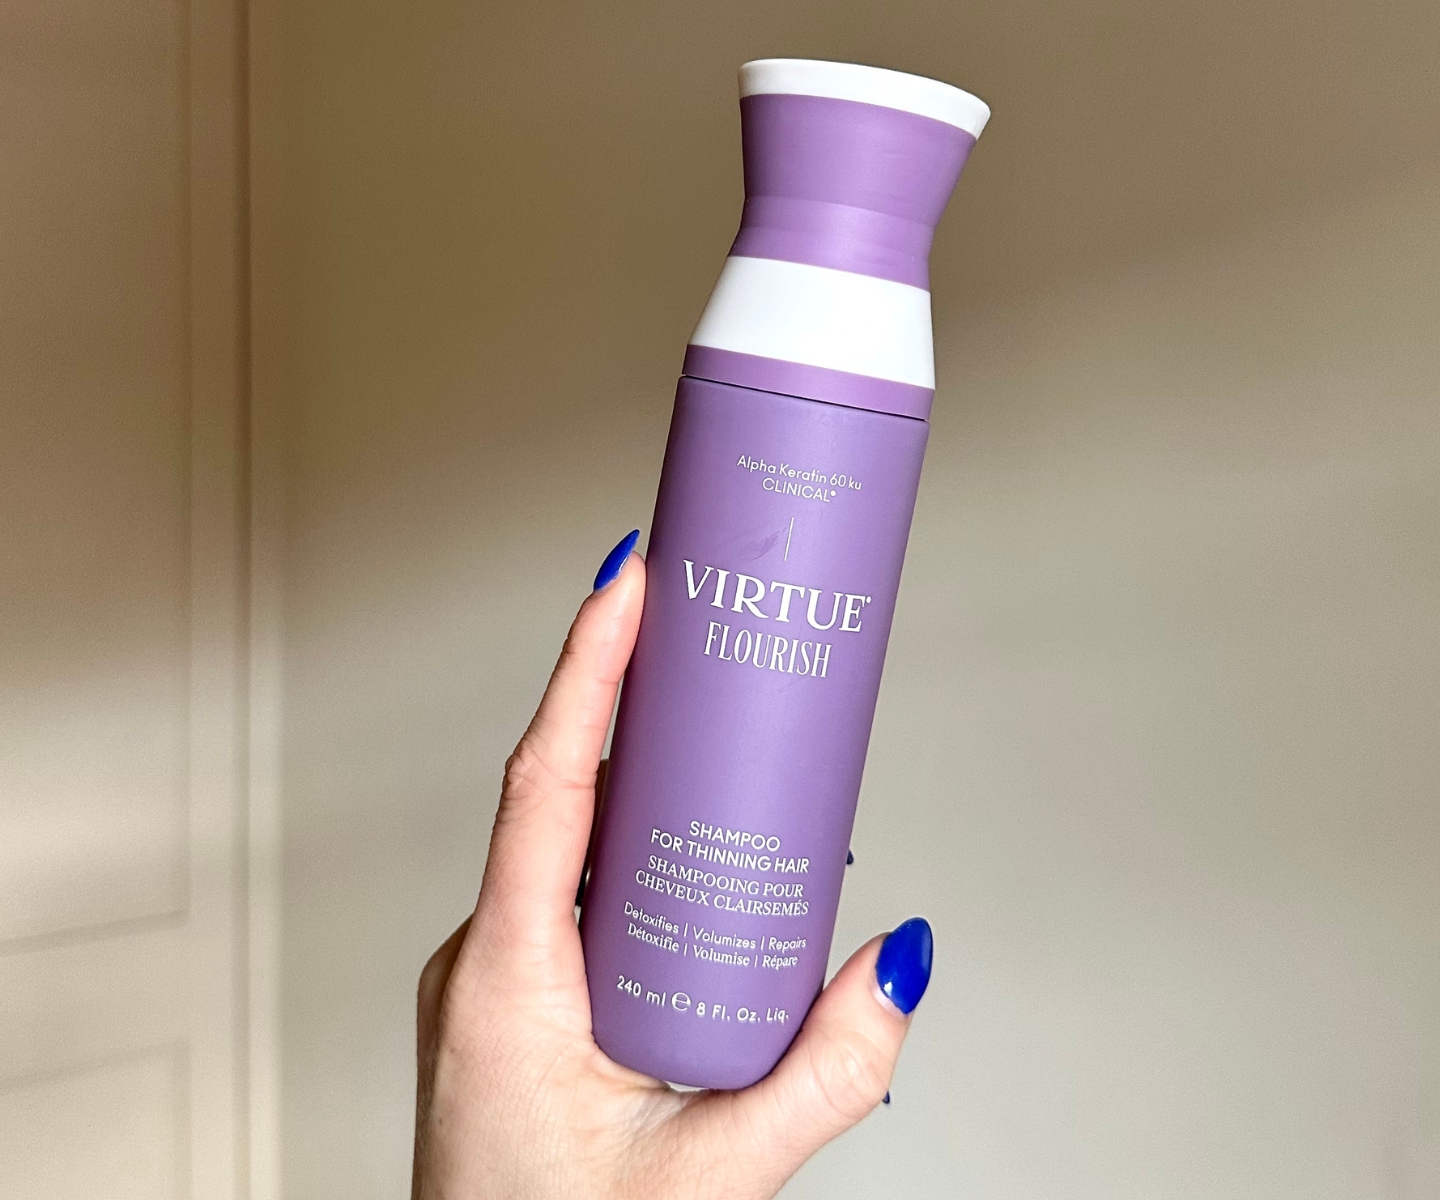 Virtue flourish shampoo in-article